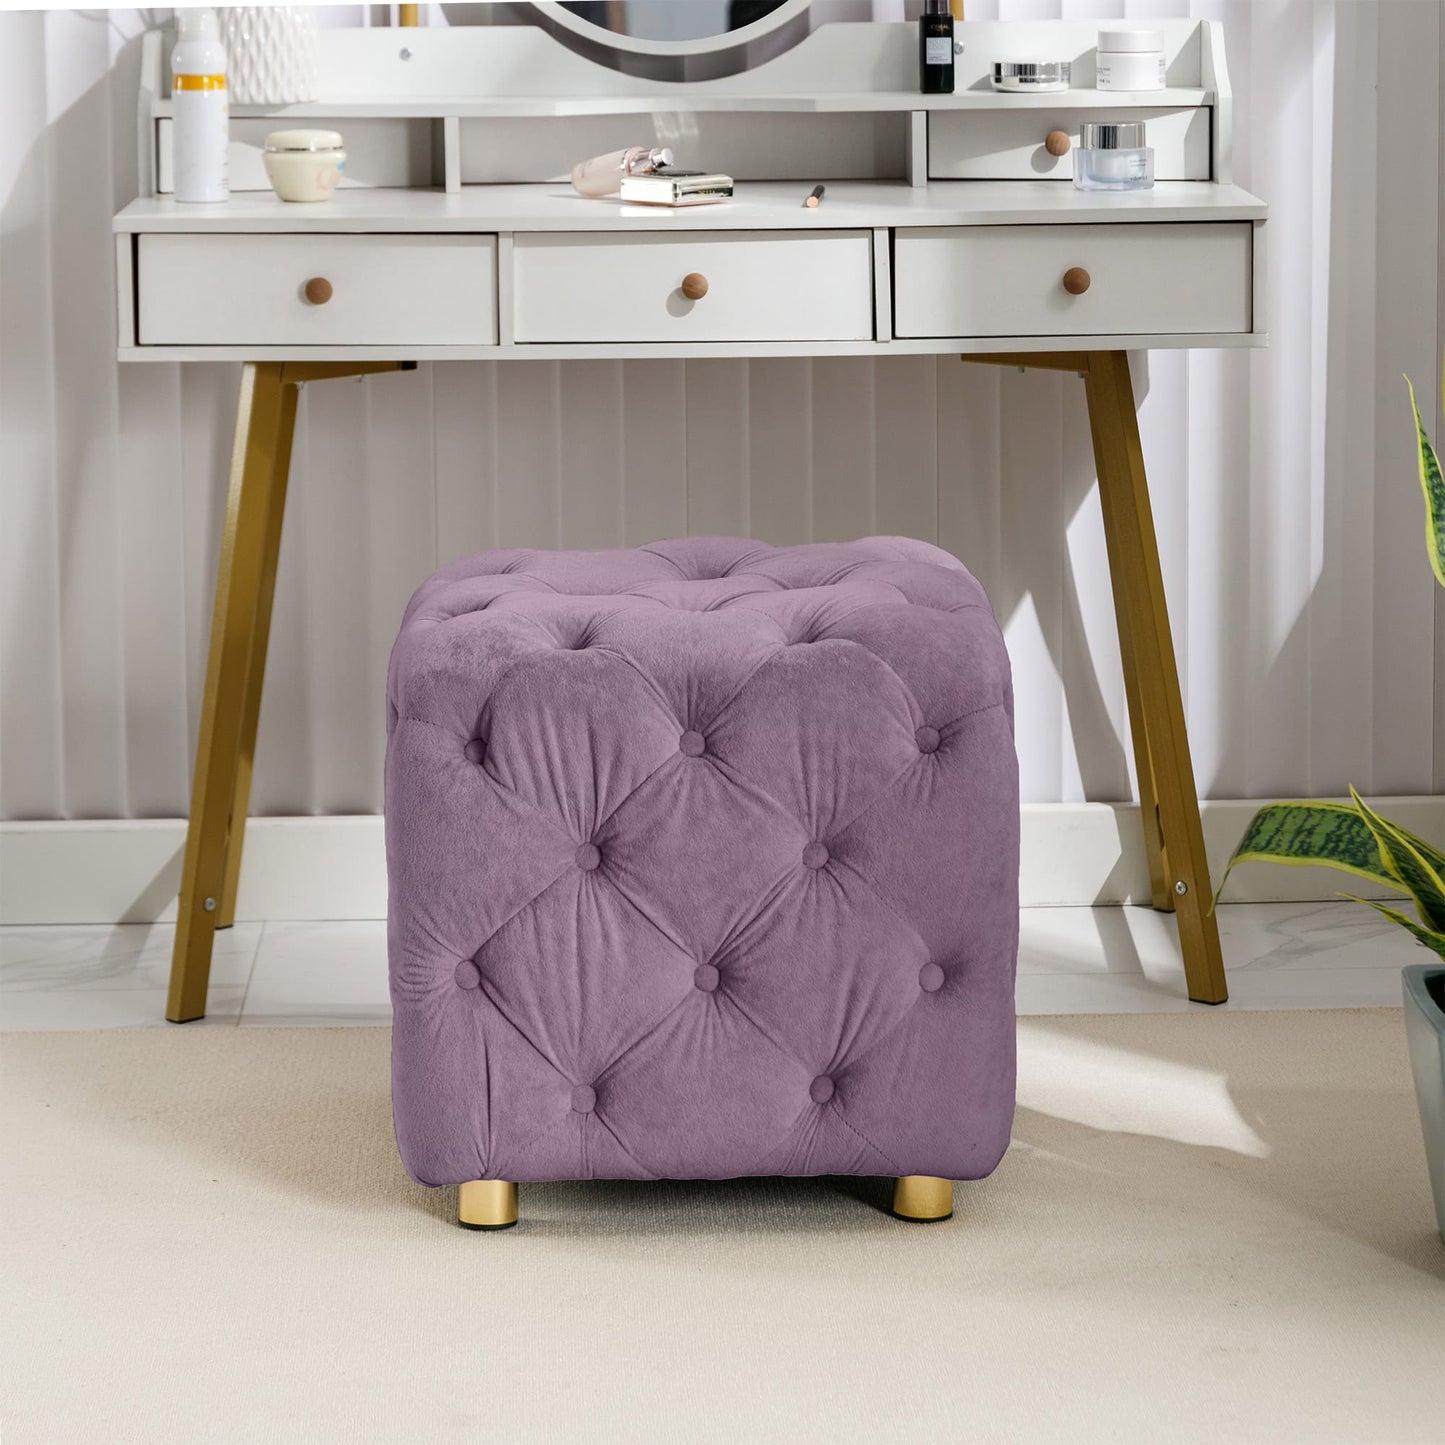 Modern Velvet Upholstered Square Ottoman, Exquisite Small Soft Foot Stool- Purple